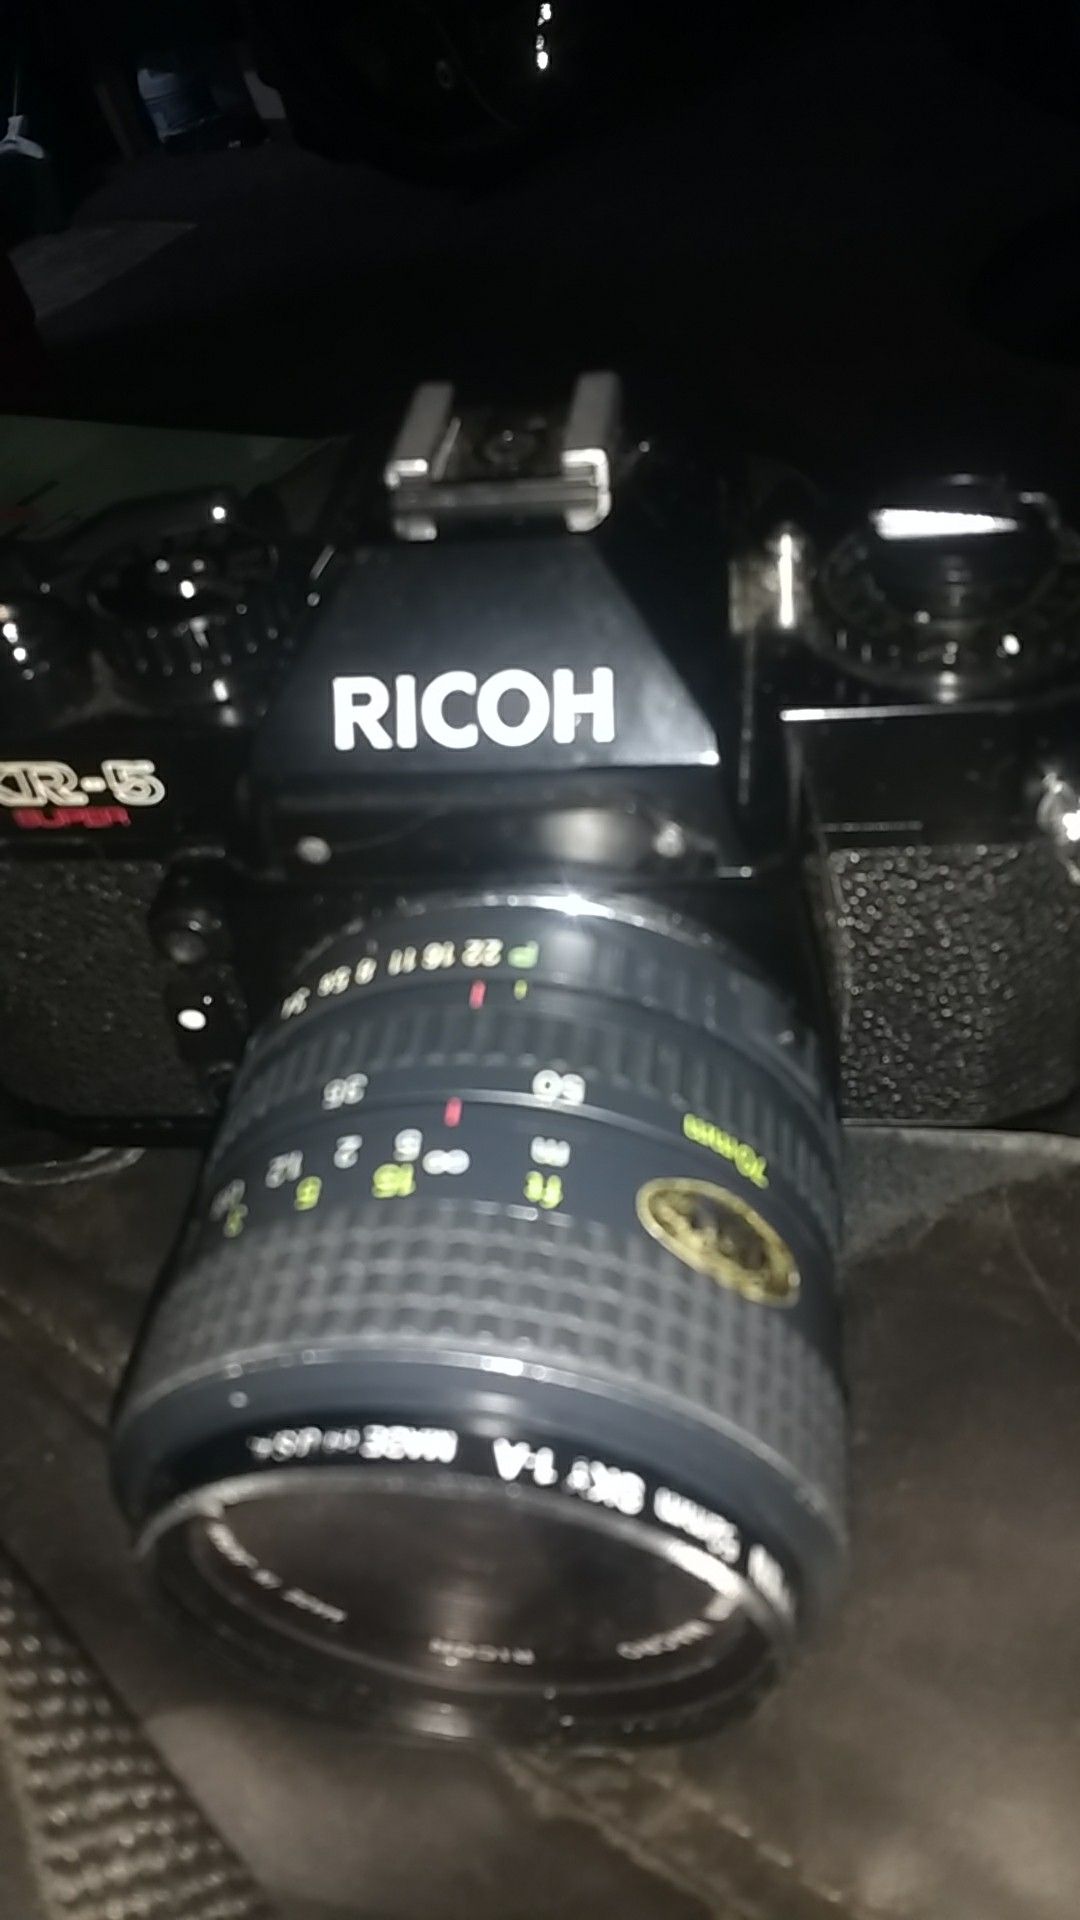 Ricoh Kr-5 super film camera